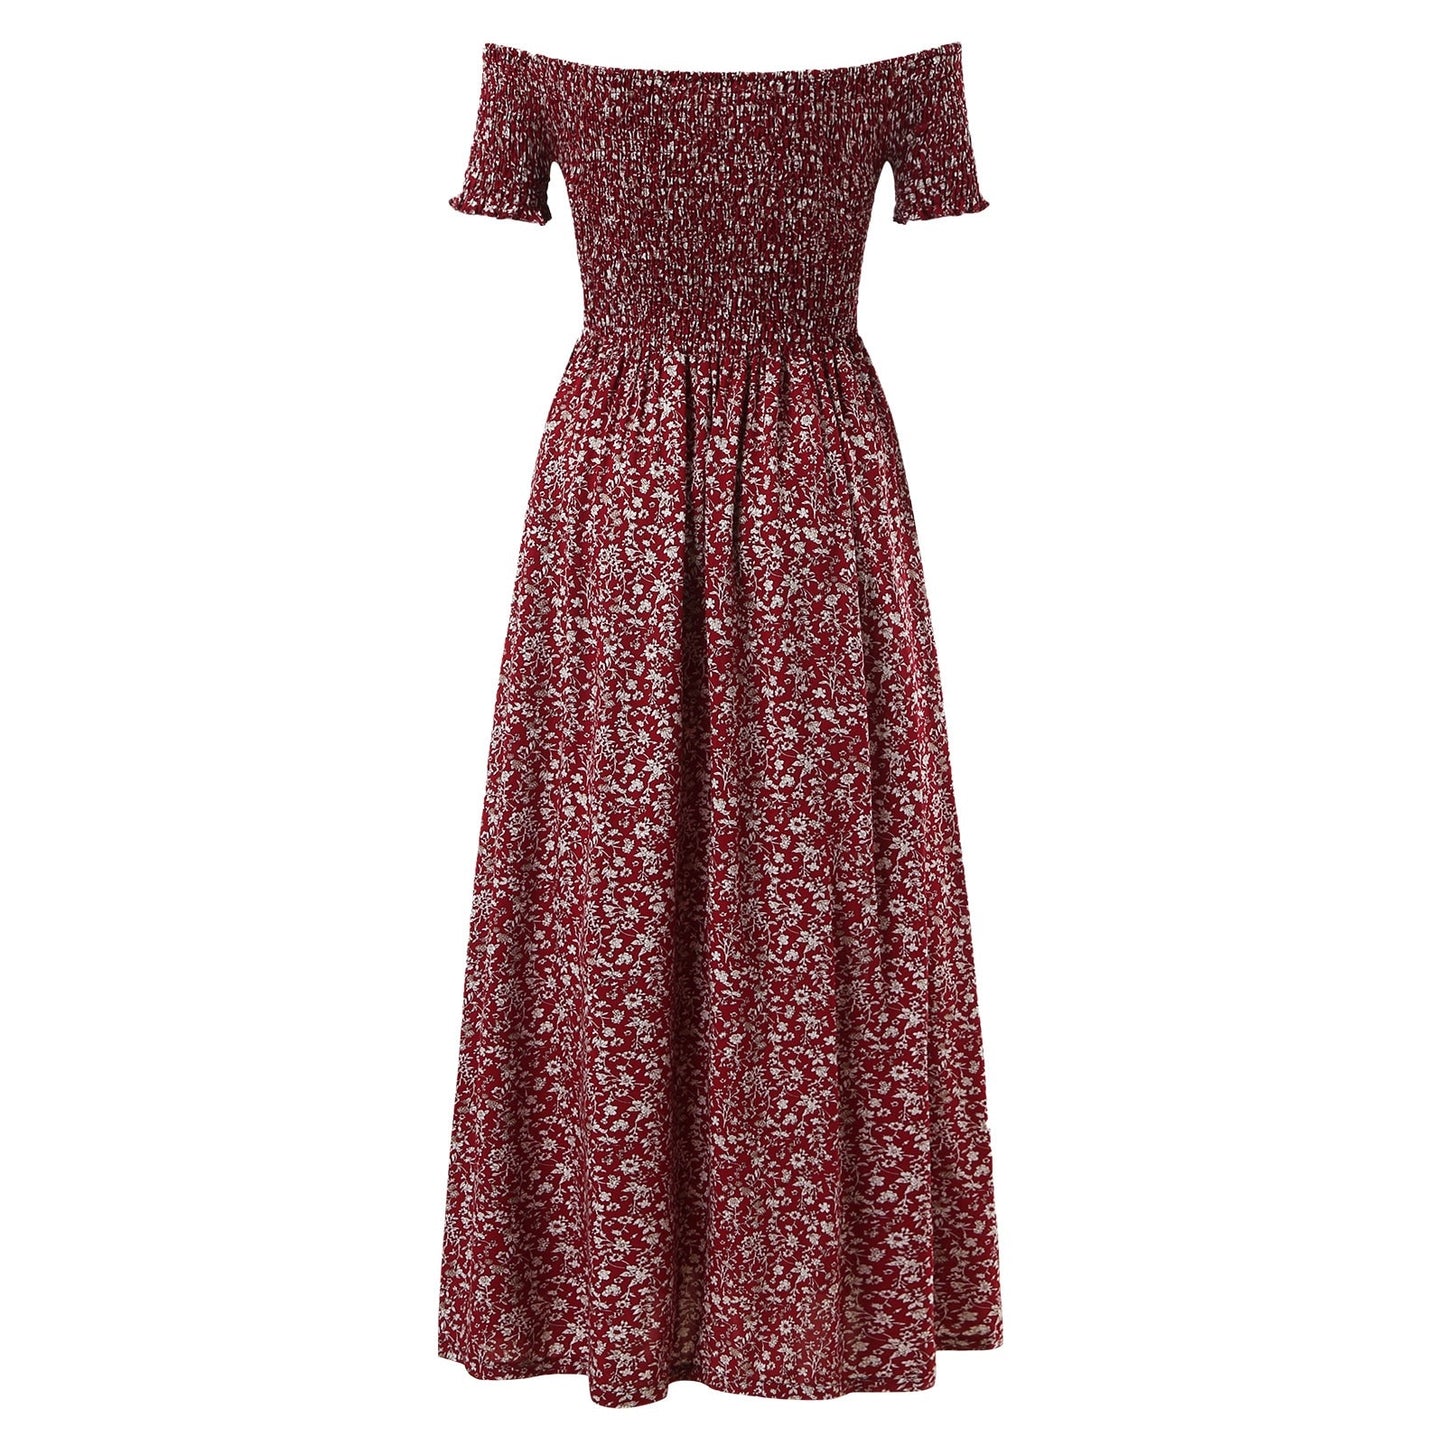 Women Long Summer Dress Casual Plus Size Flower Print Maxi Dresses- WD8183